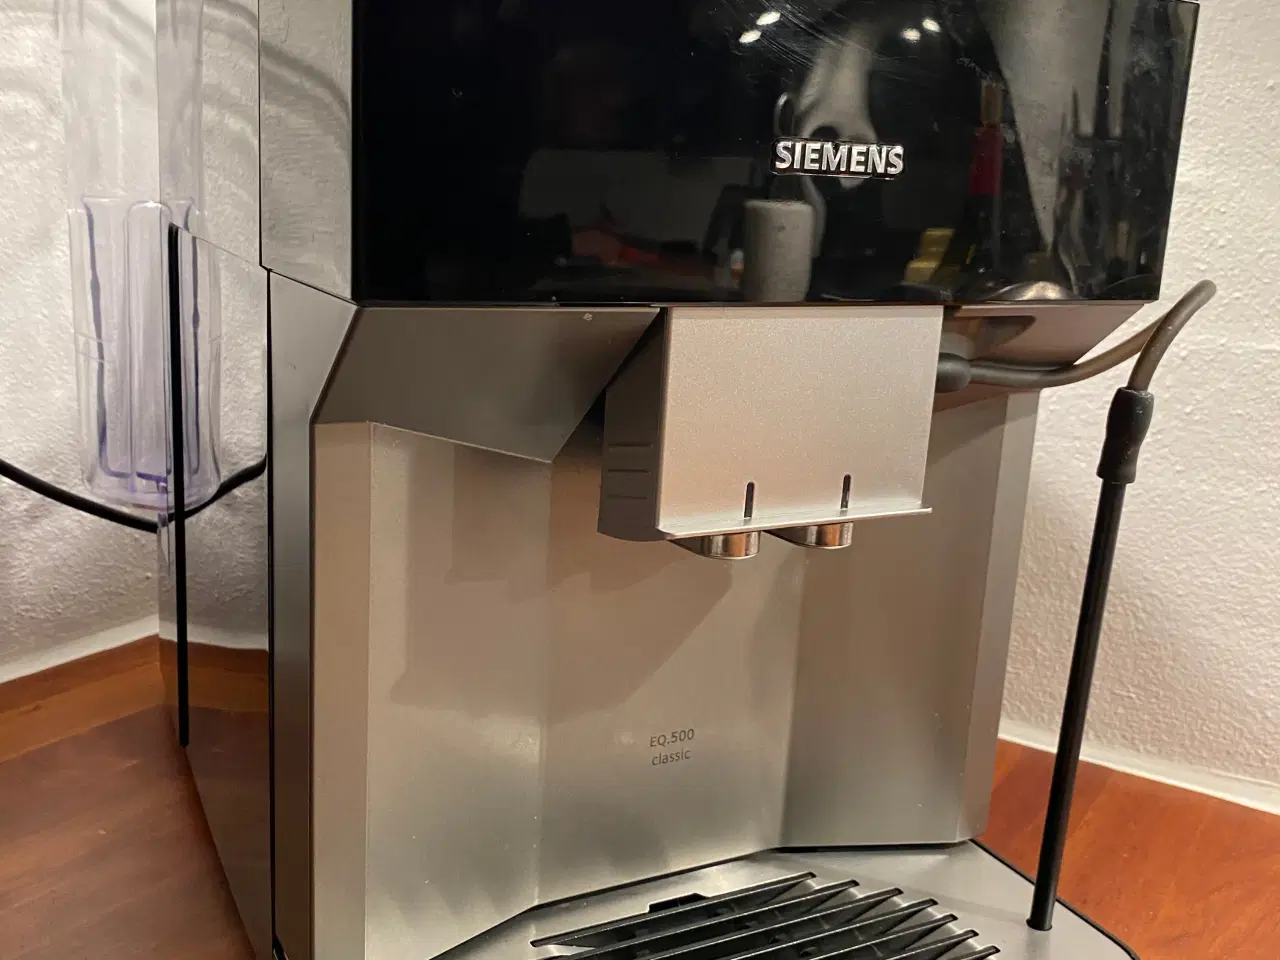 Billede 1 - Siemens Kaffemaskine